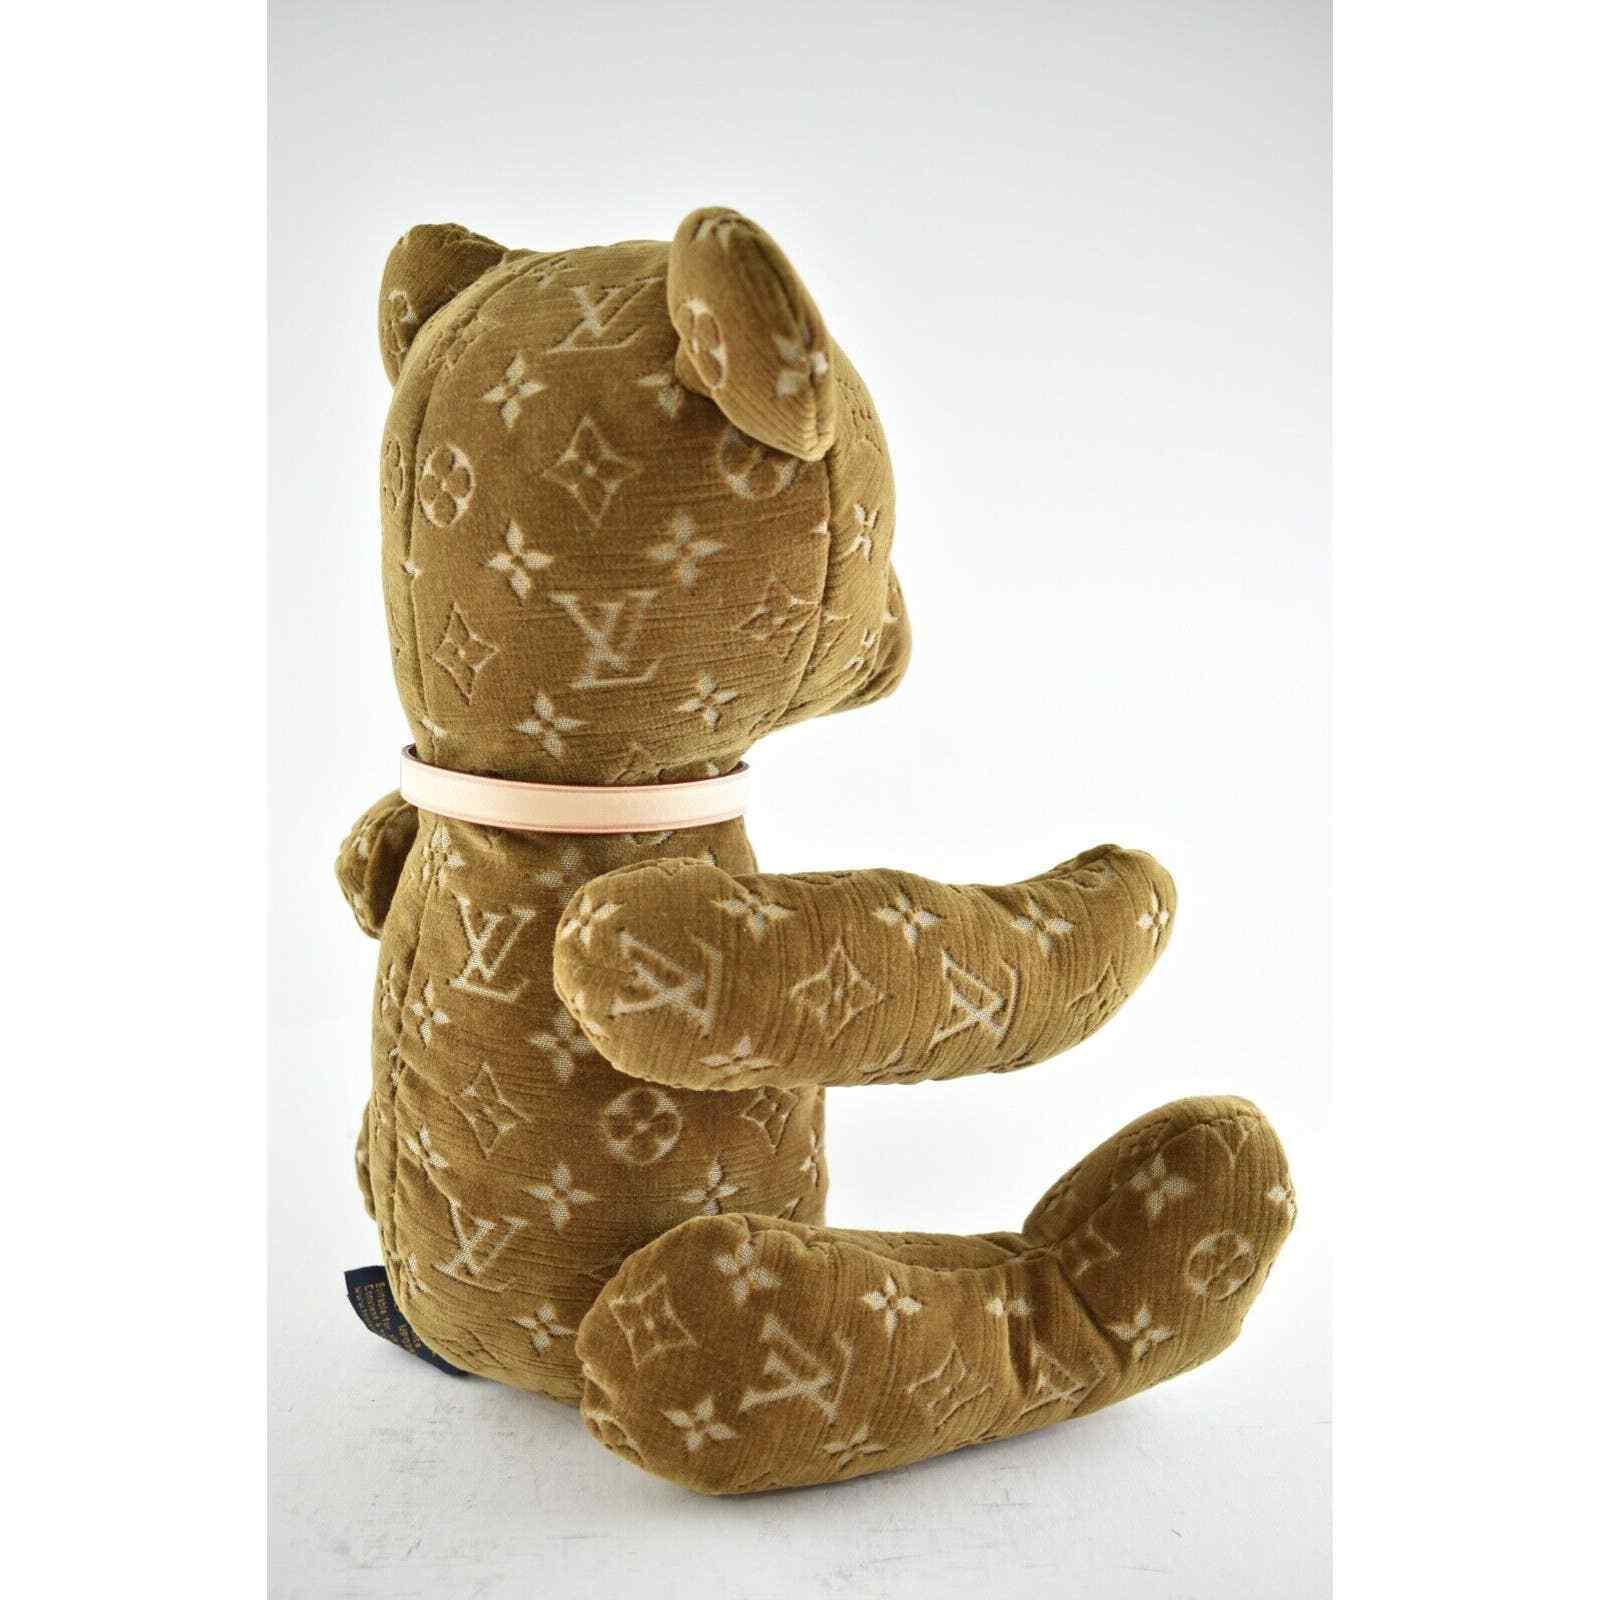 2005 Louis Vuitton Monogram Limited Edition VIP Doudou Teddy Bear